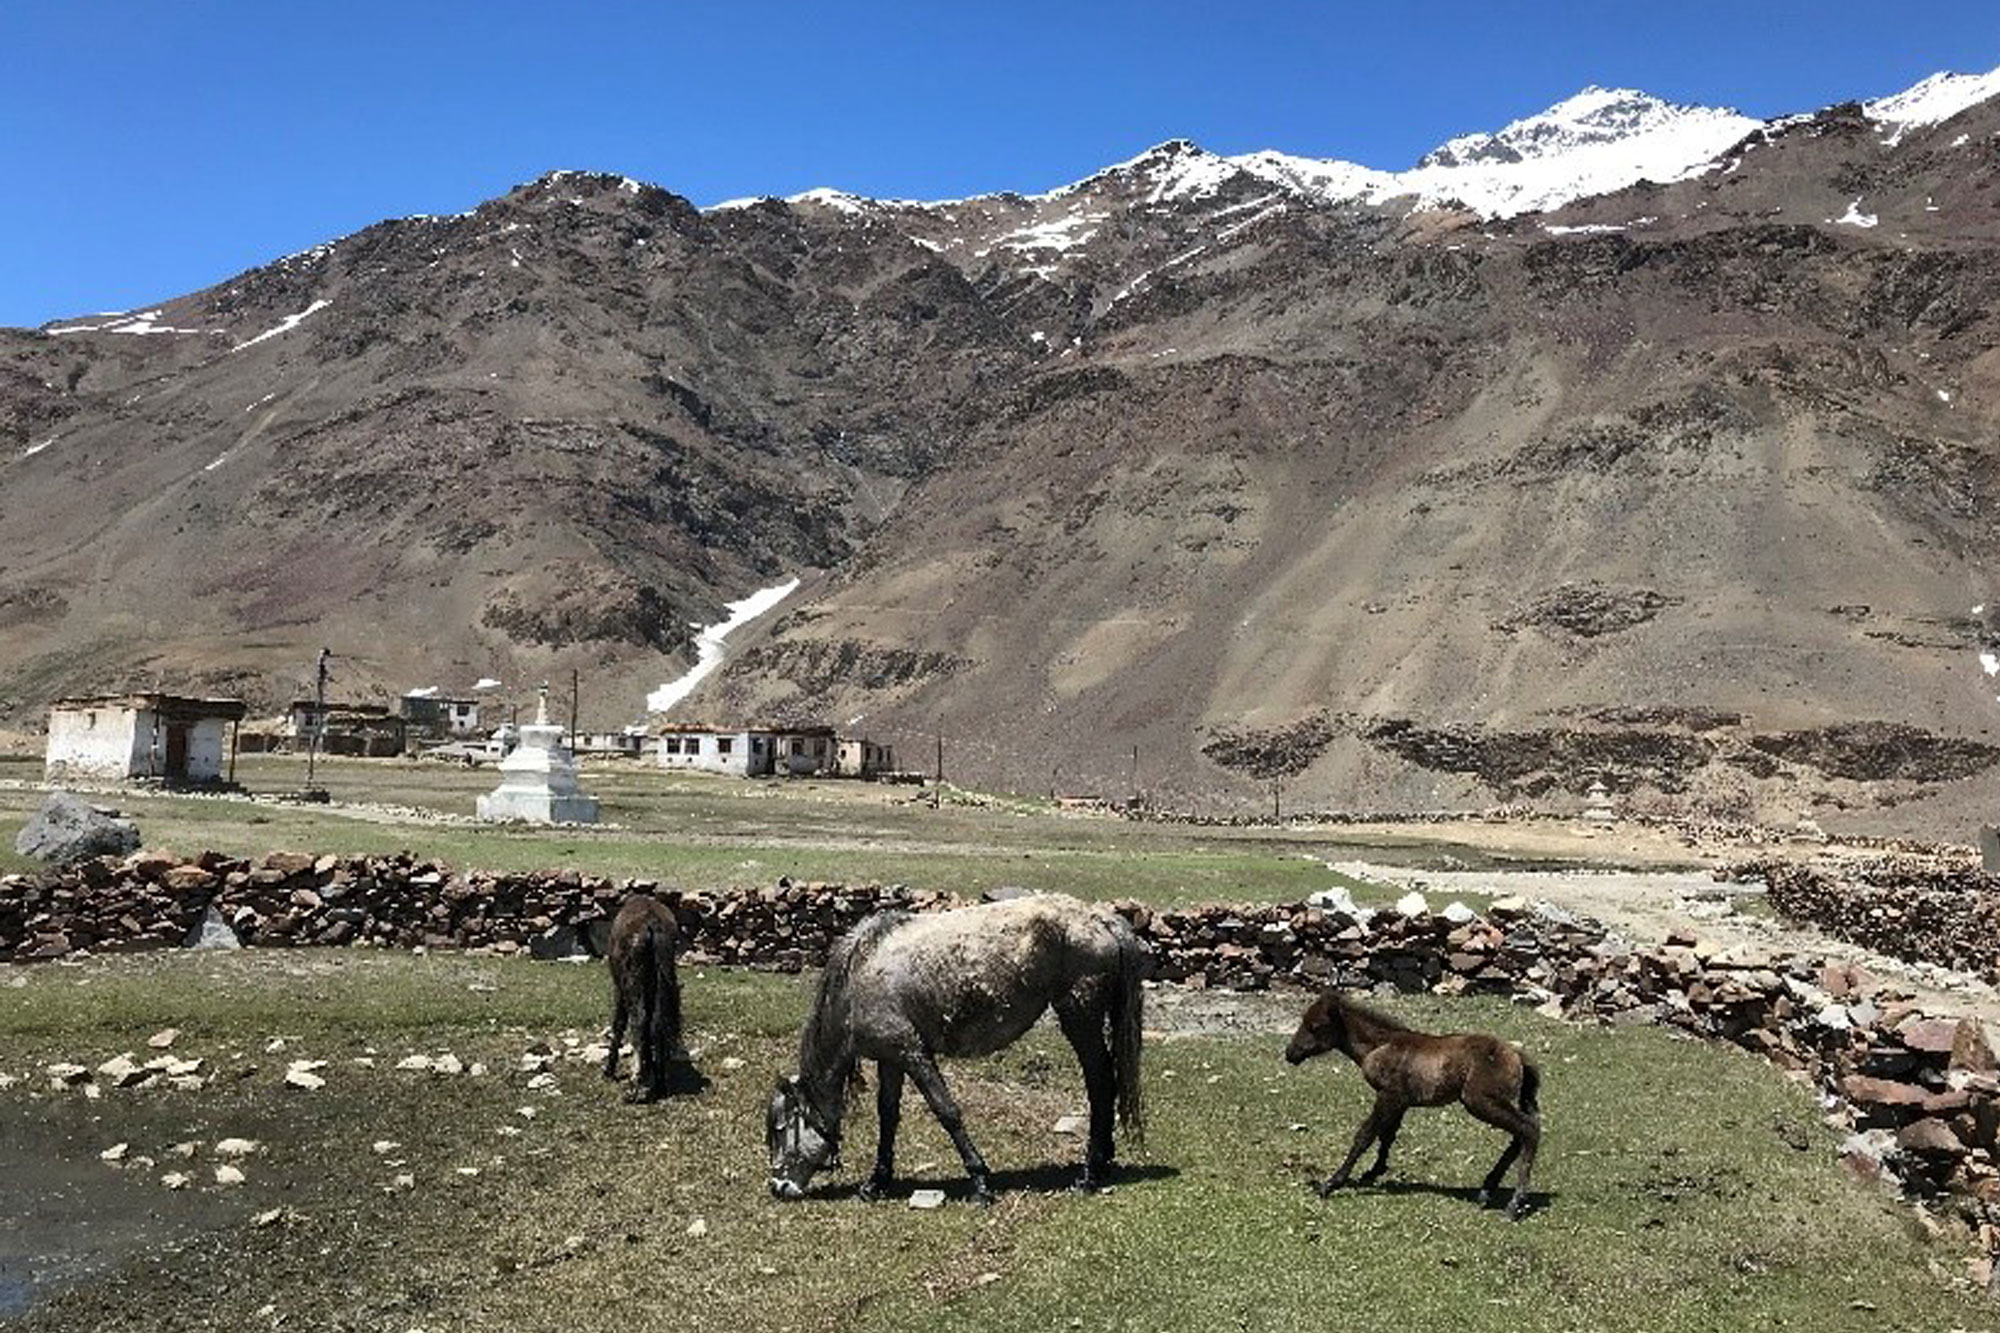 A Himalayan farm with livestock grazing